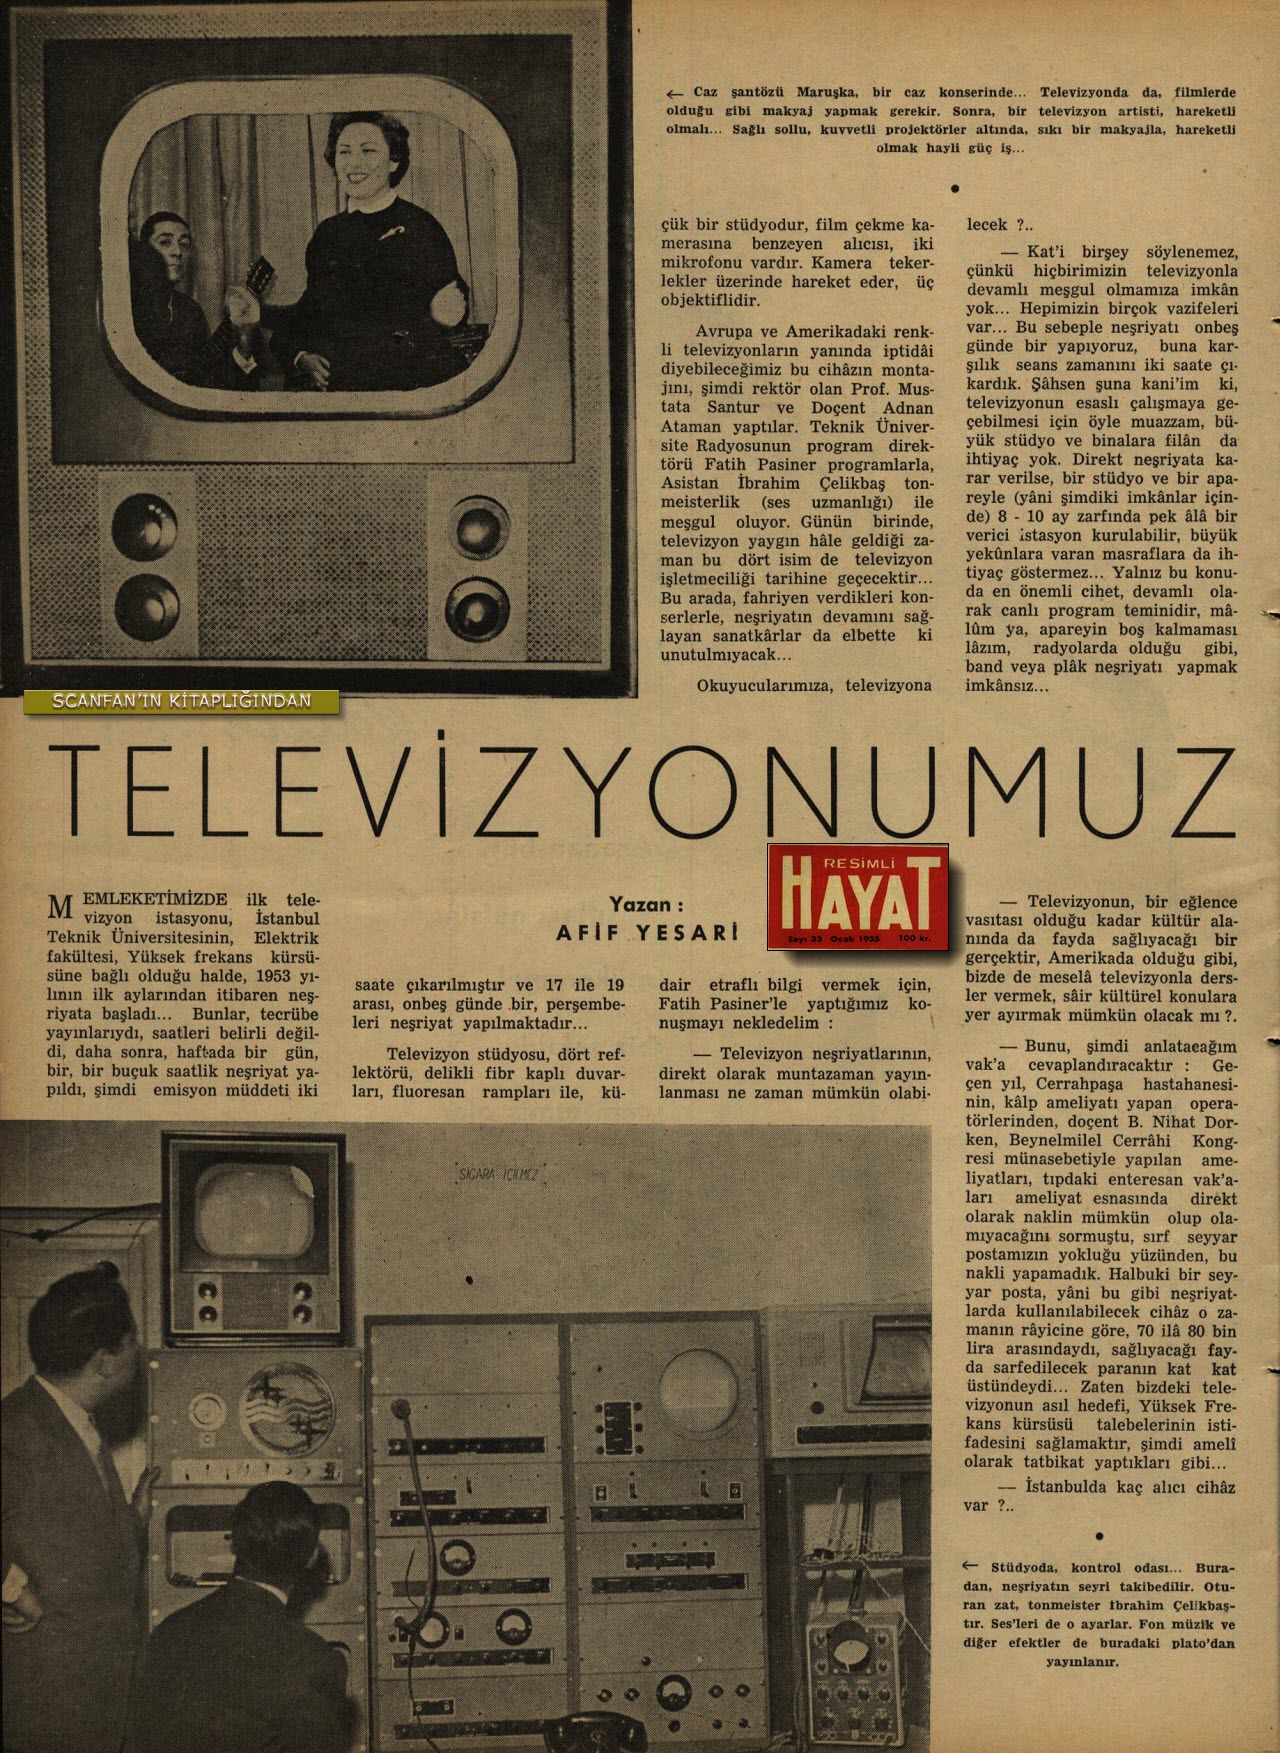 lk-TV-RES-ML-HAYAT-1955-1a.jpg